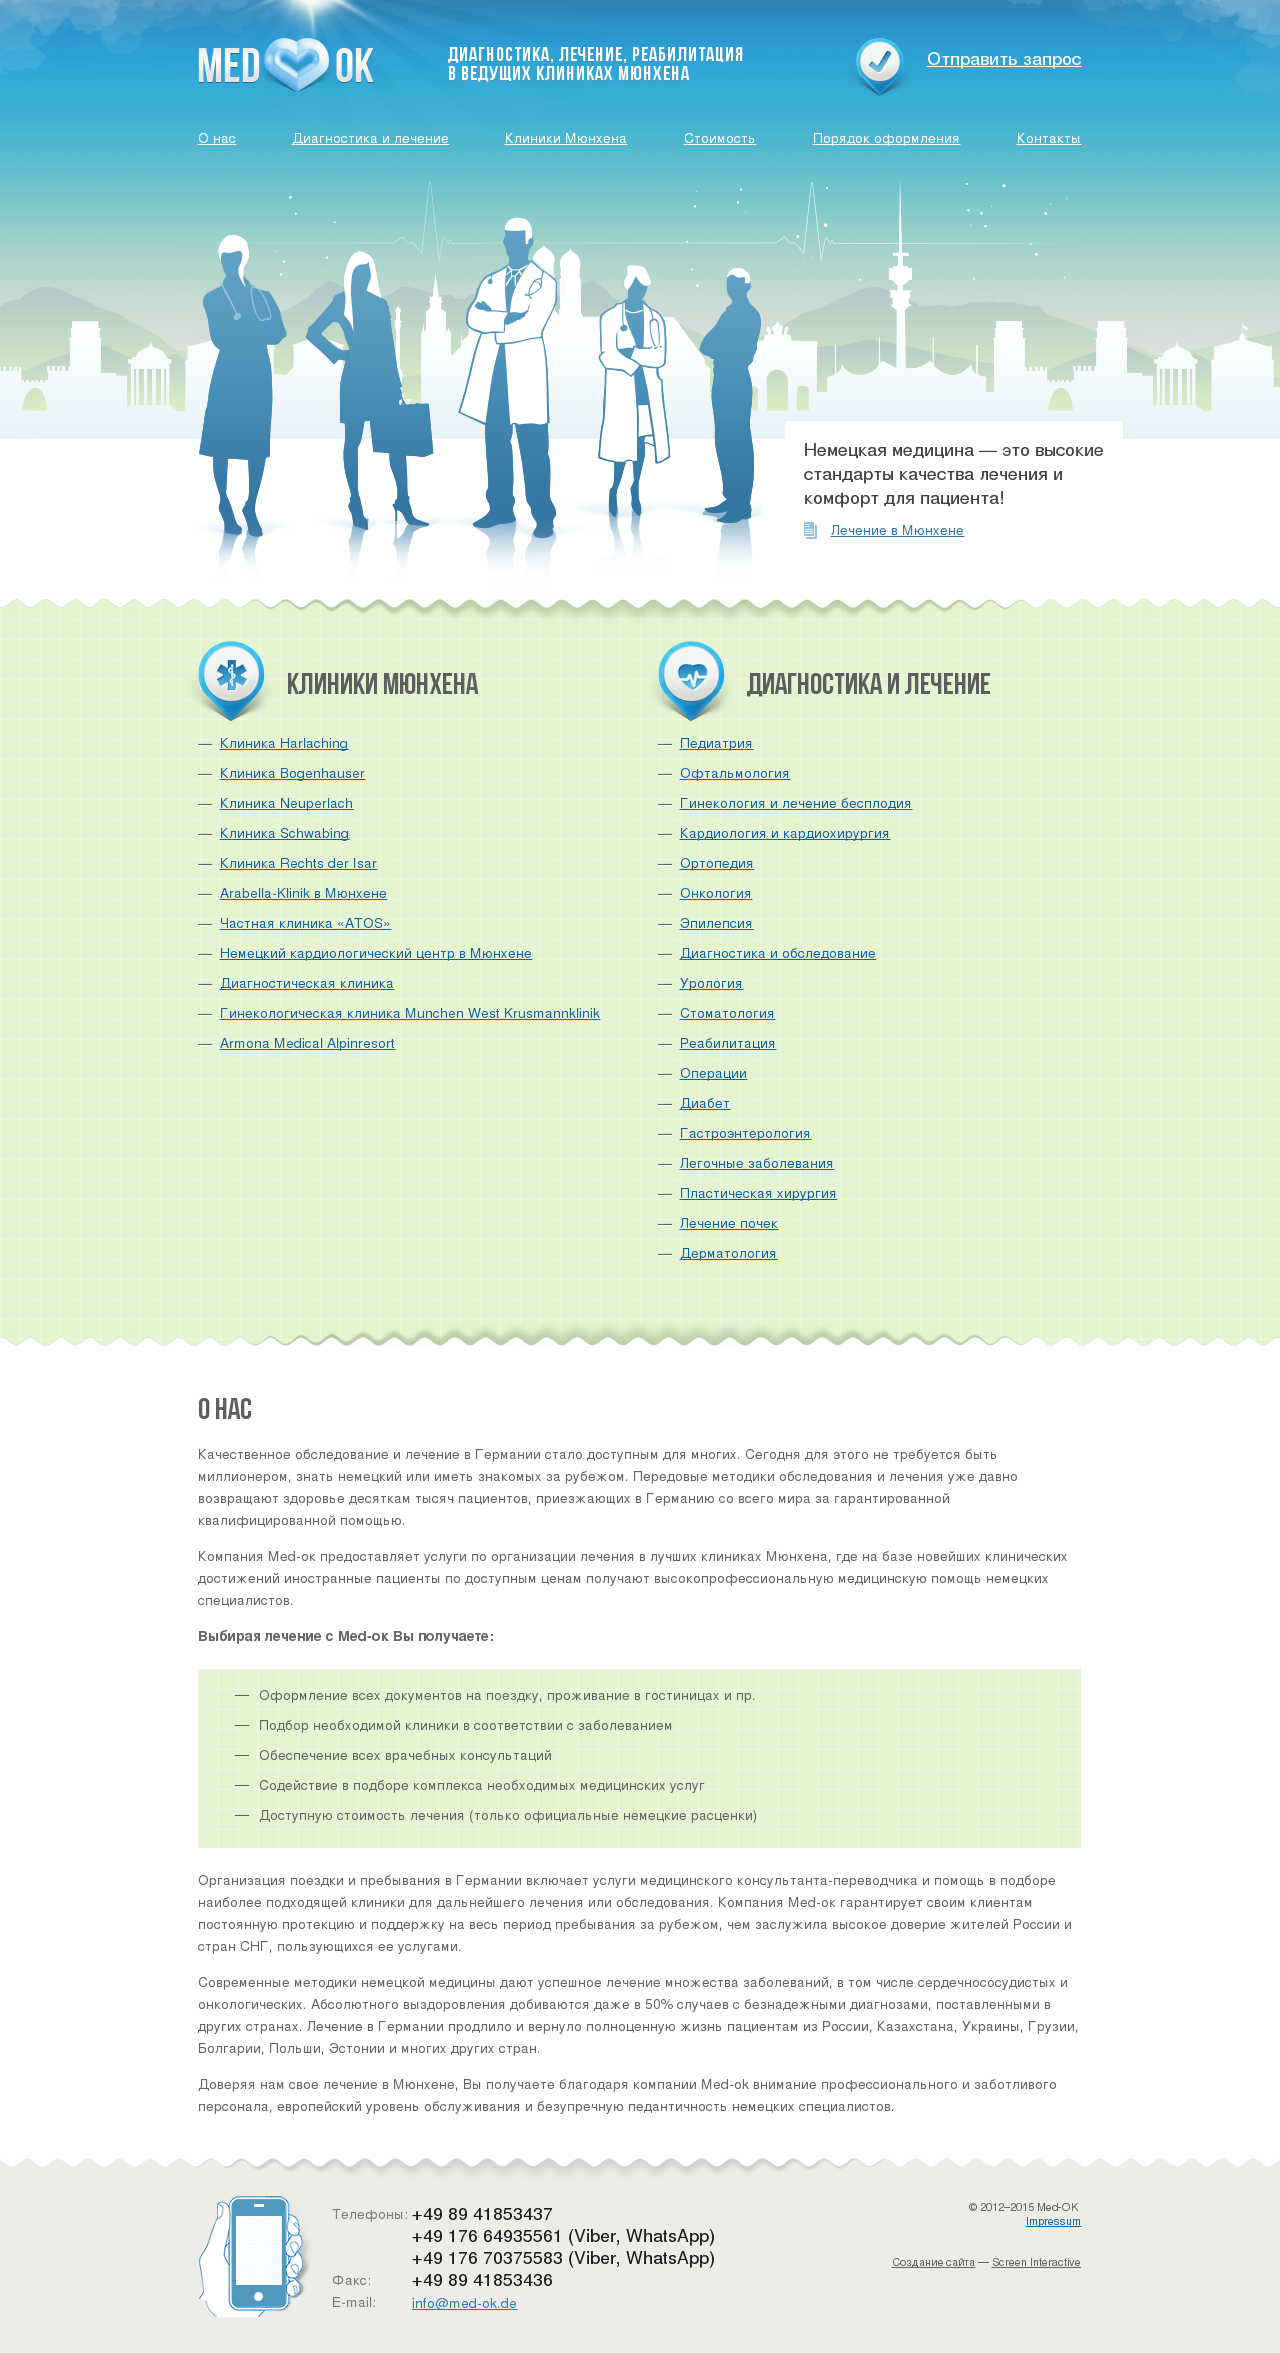 Med-OK company website, main page